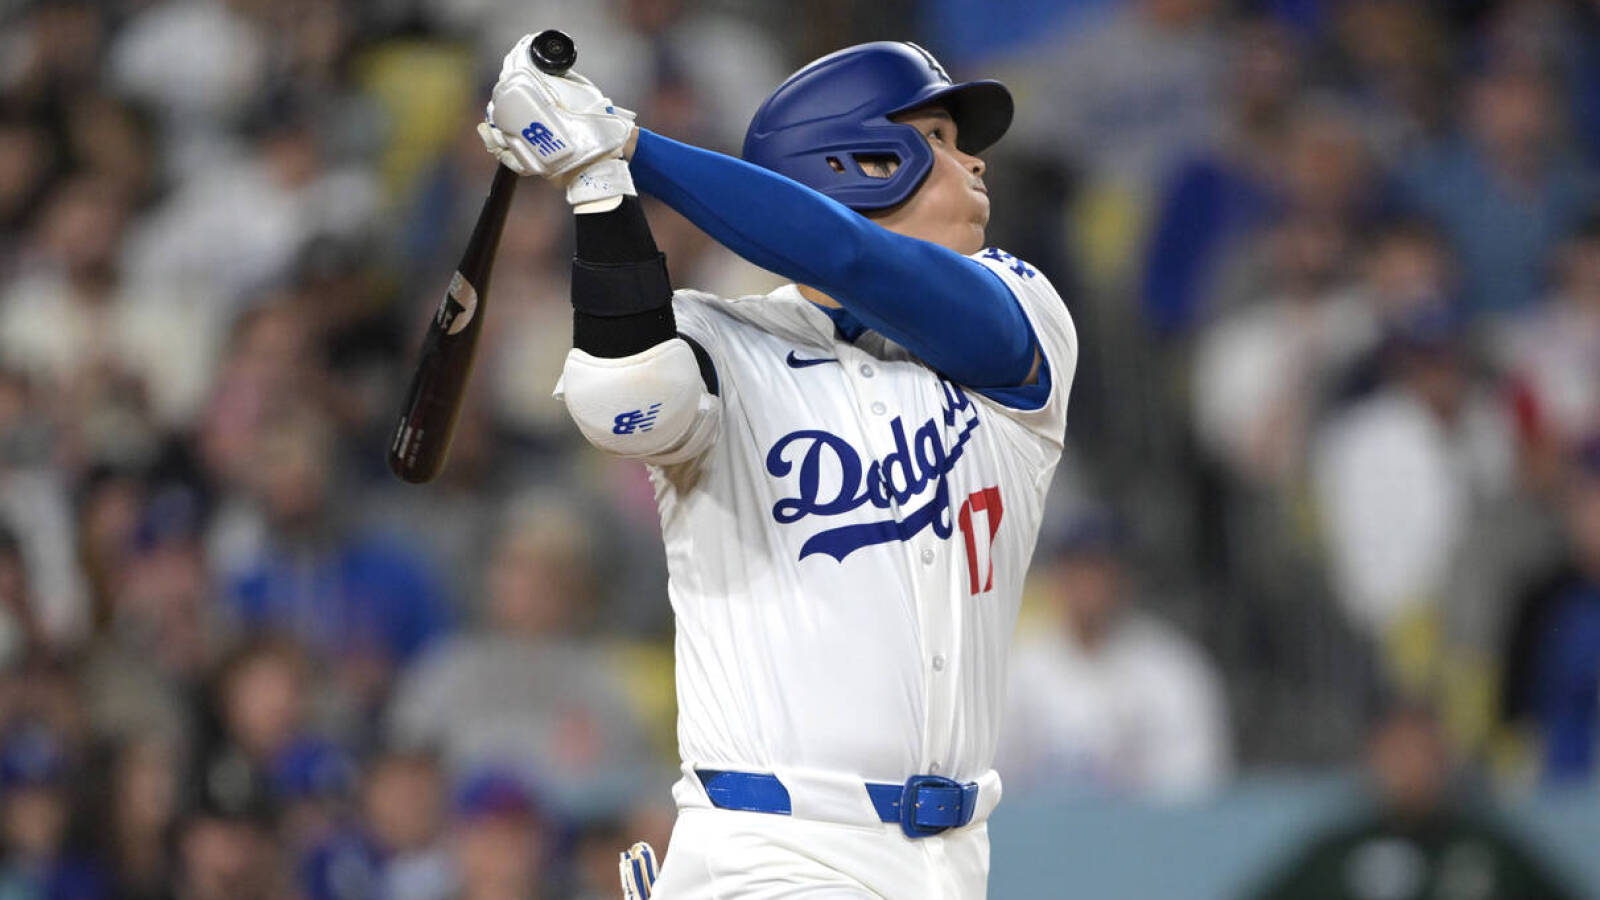 Run-in with fan over Shohei Ohtani home run ball isn't helping Dodgers' image